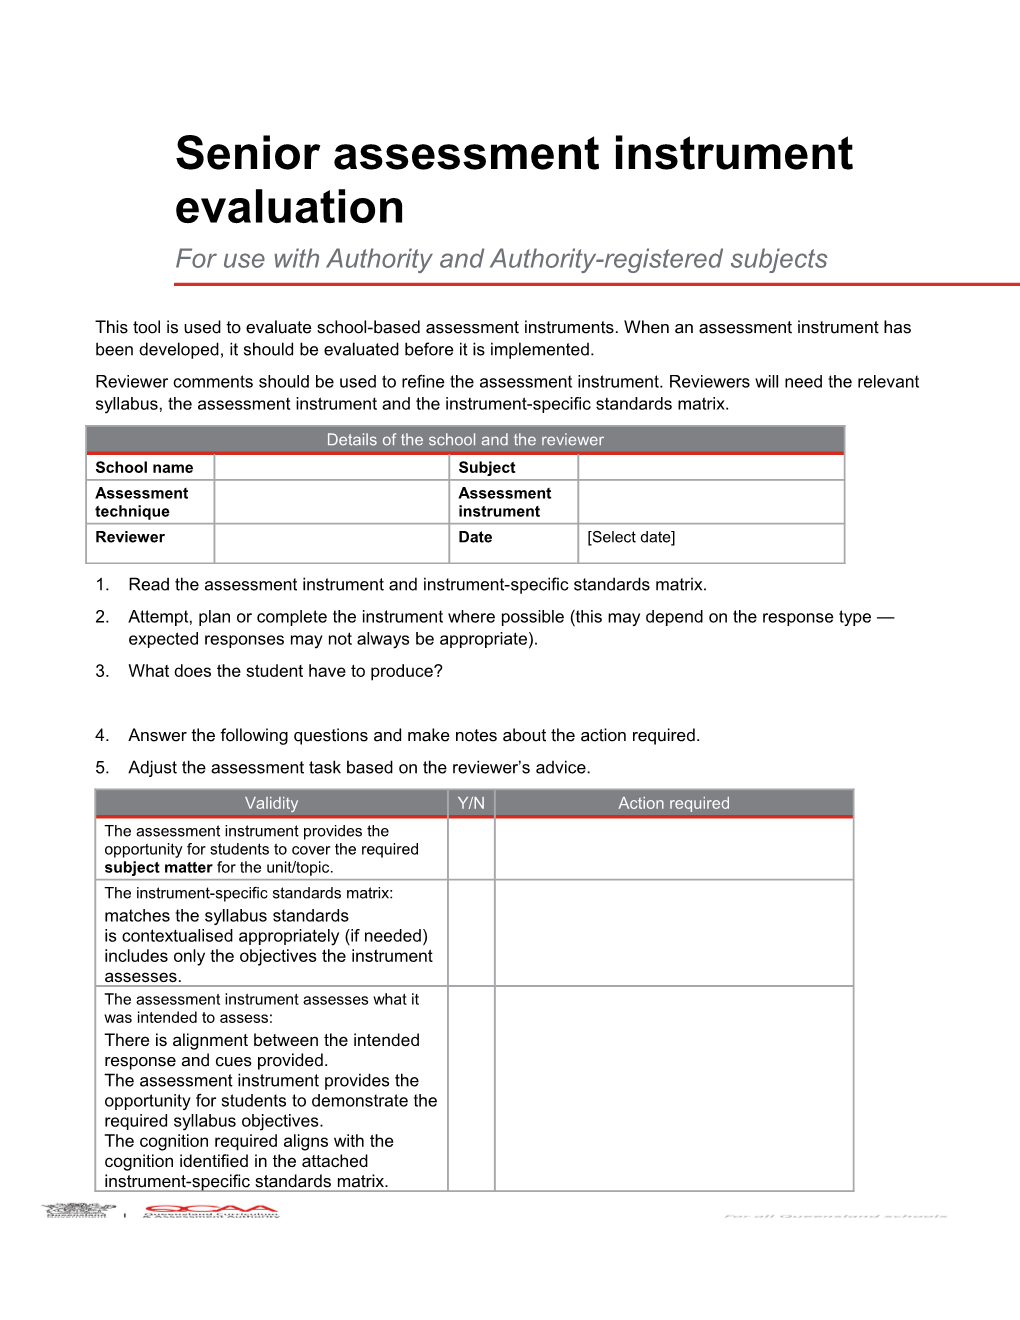 Senior Assessment Instrument Evaluation Template